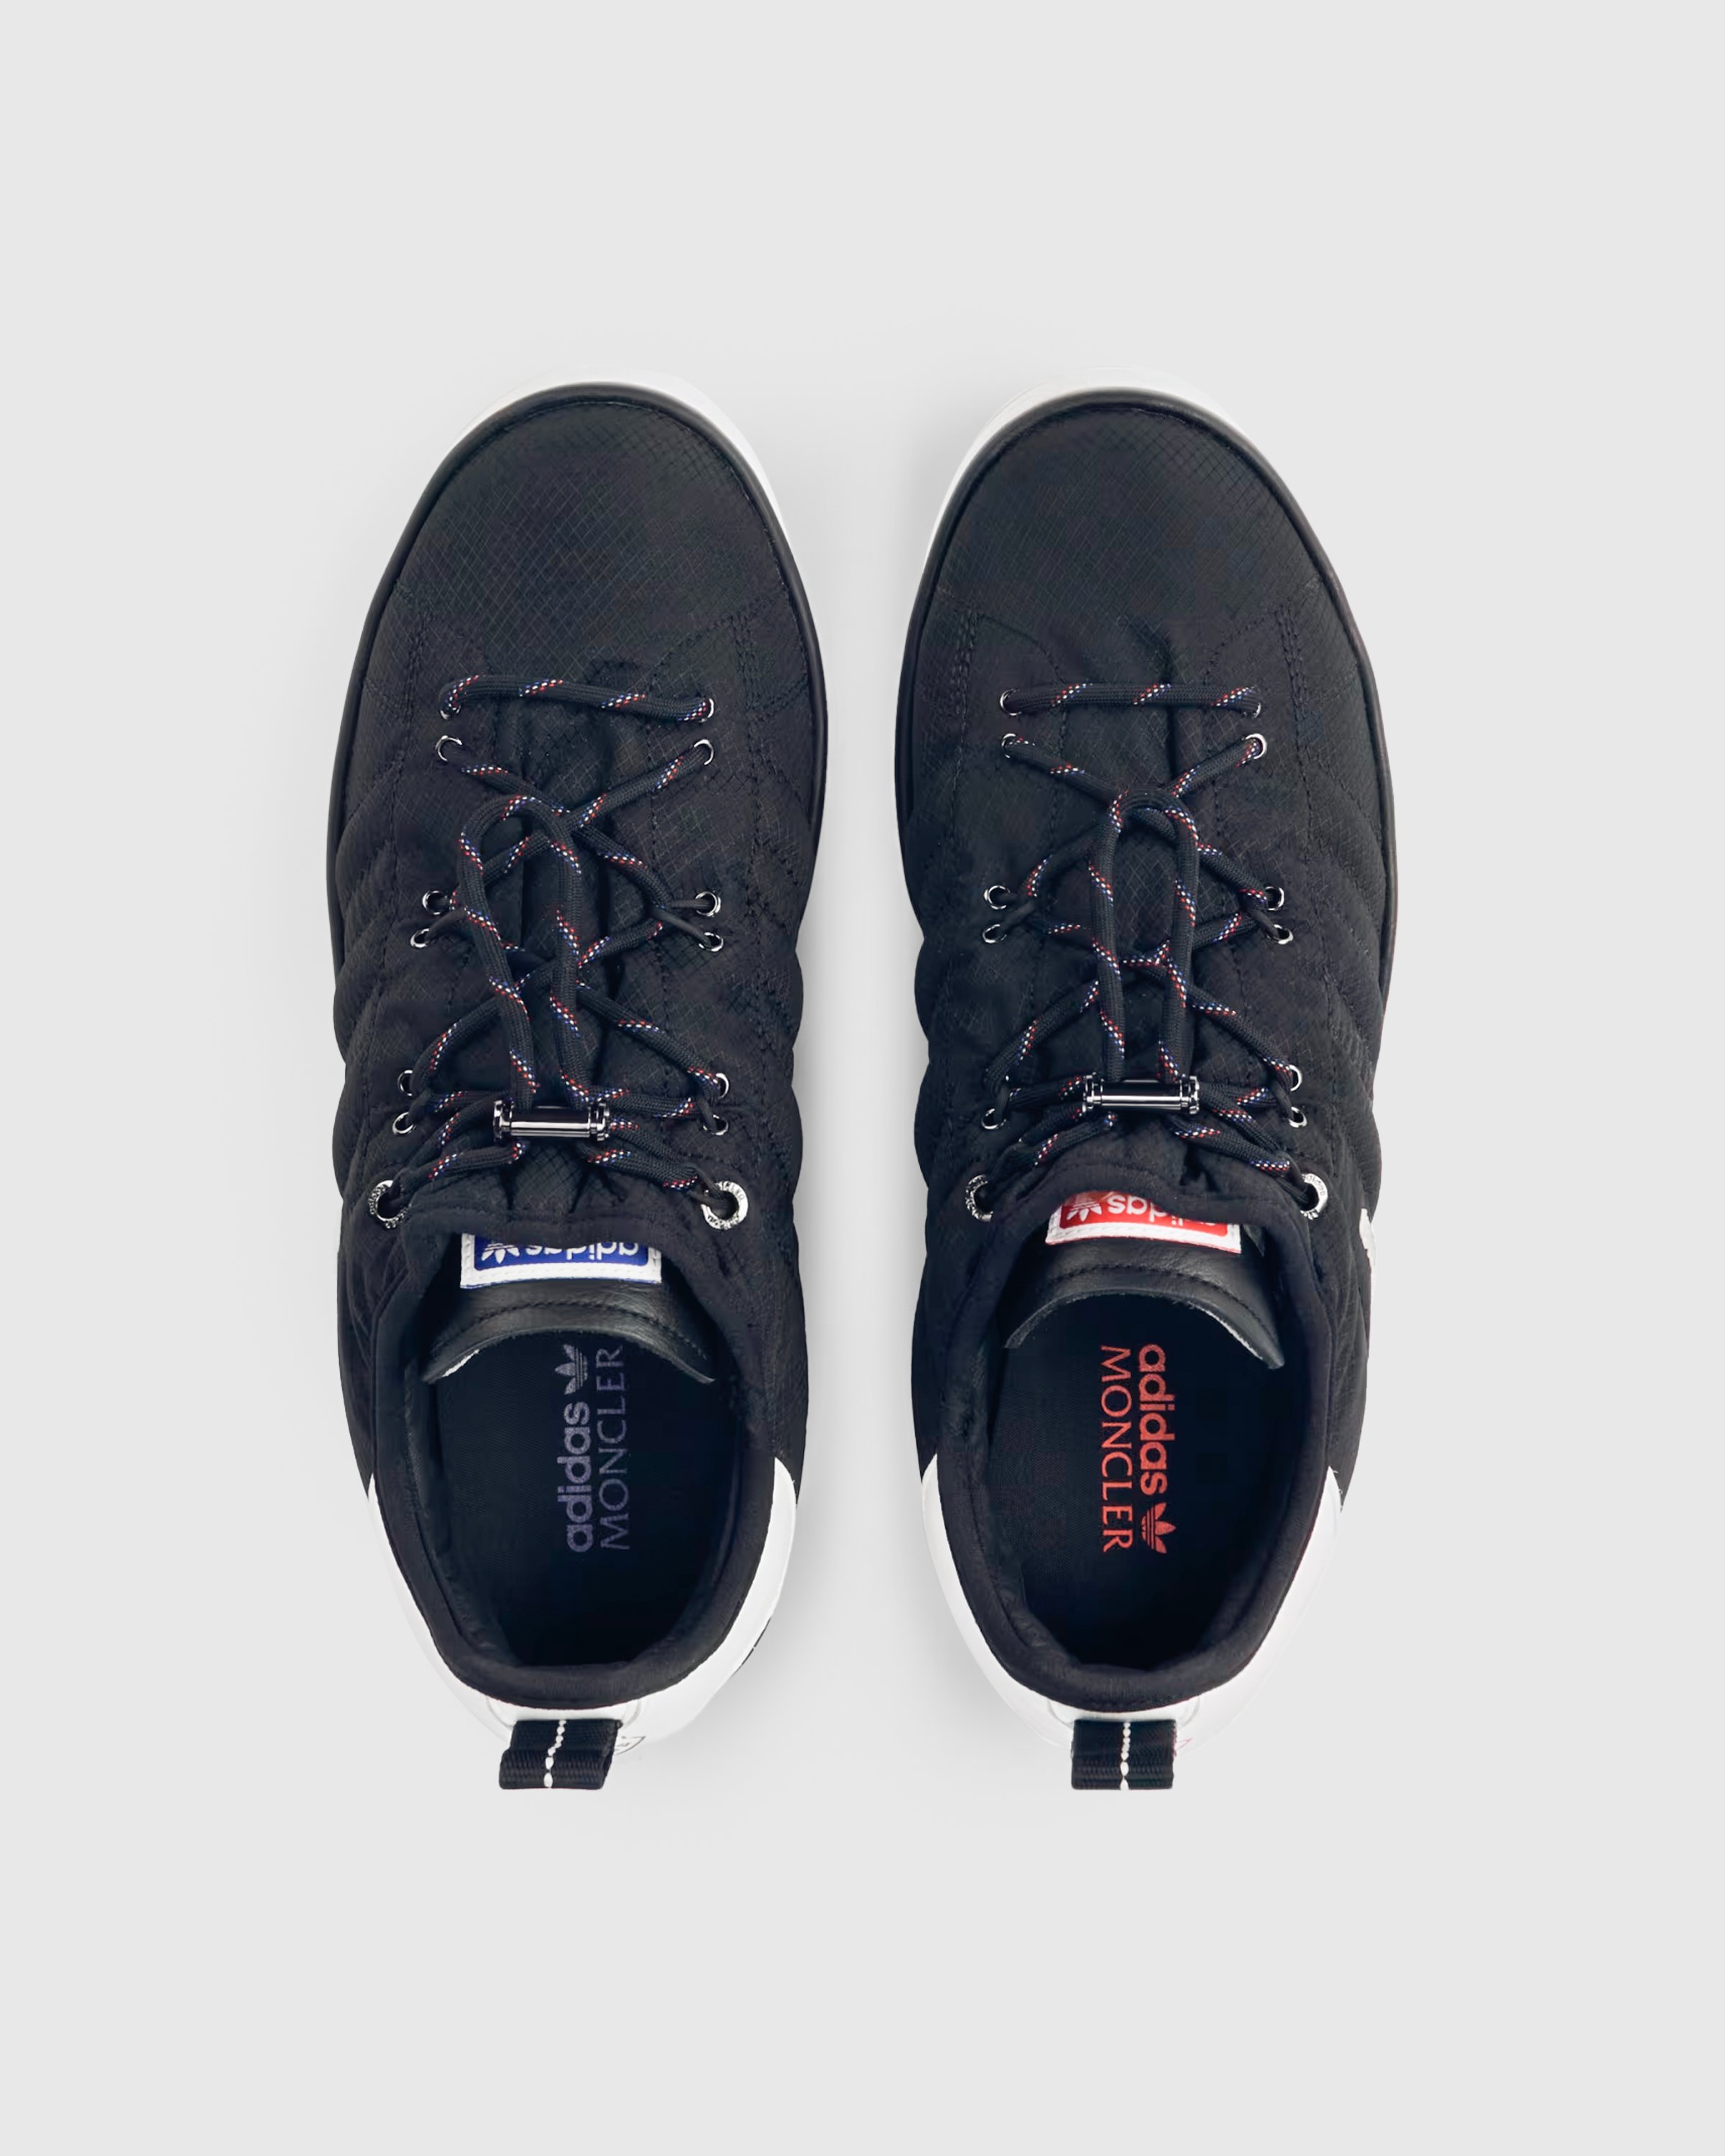 Moncler x adidas Originals - Campus Low Top Sneakers Black - Footwear - Black - Image 3